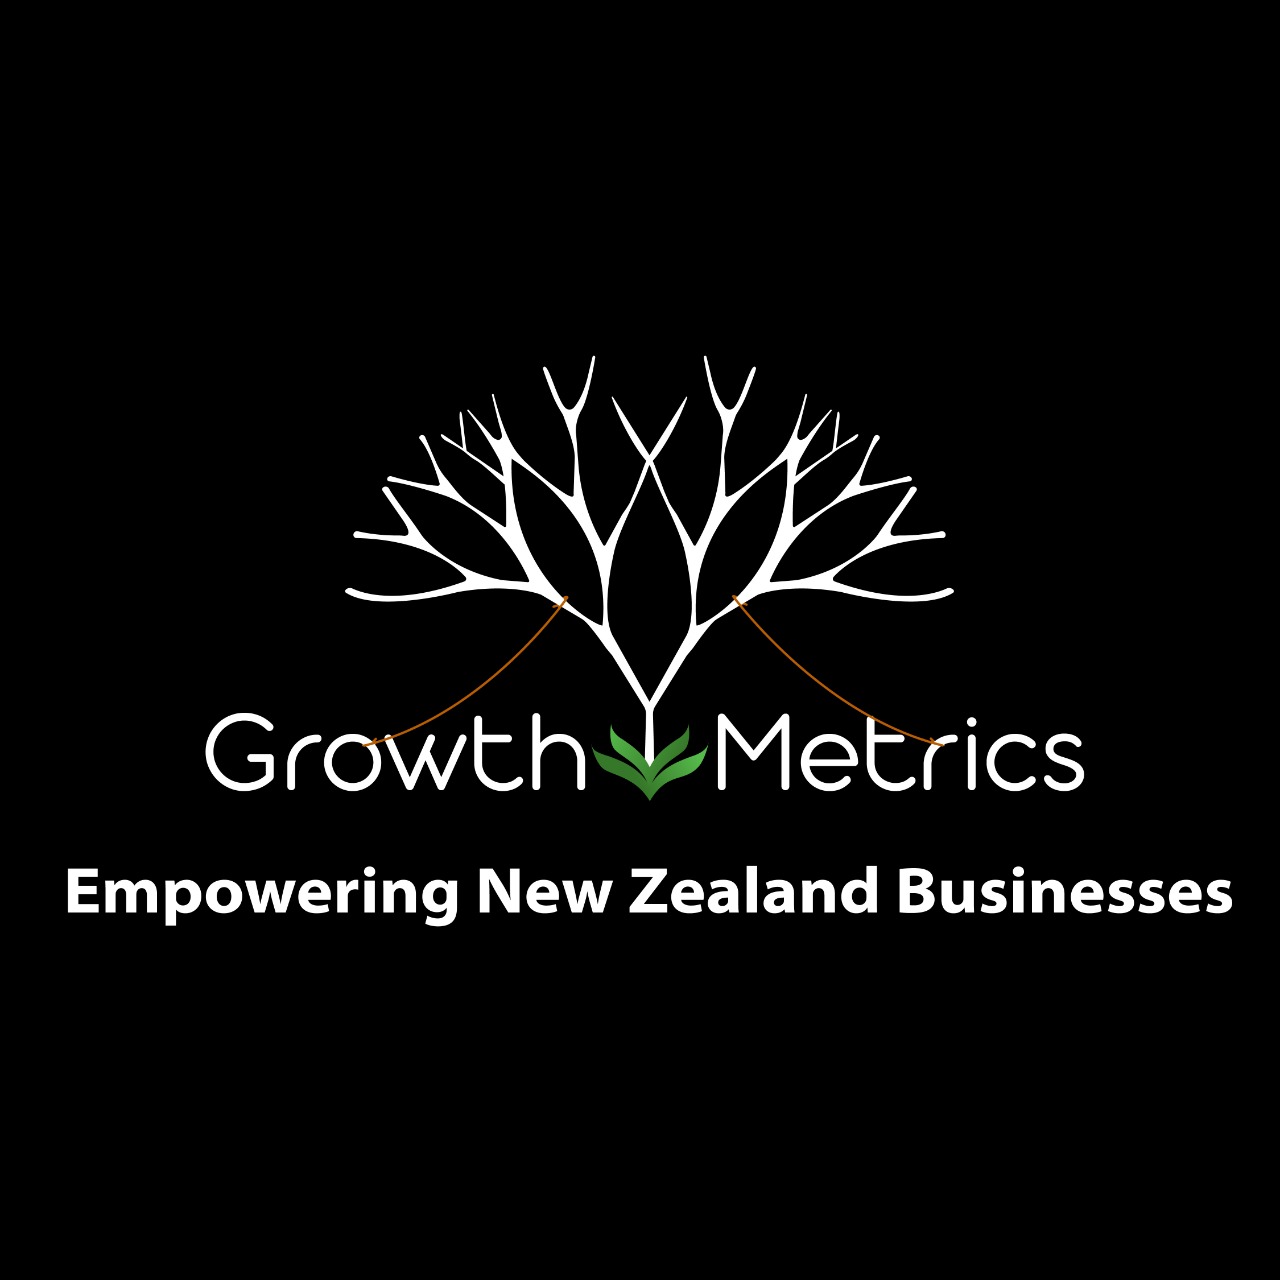 Growth metrics